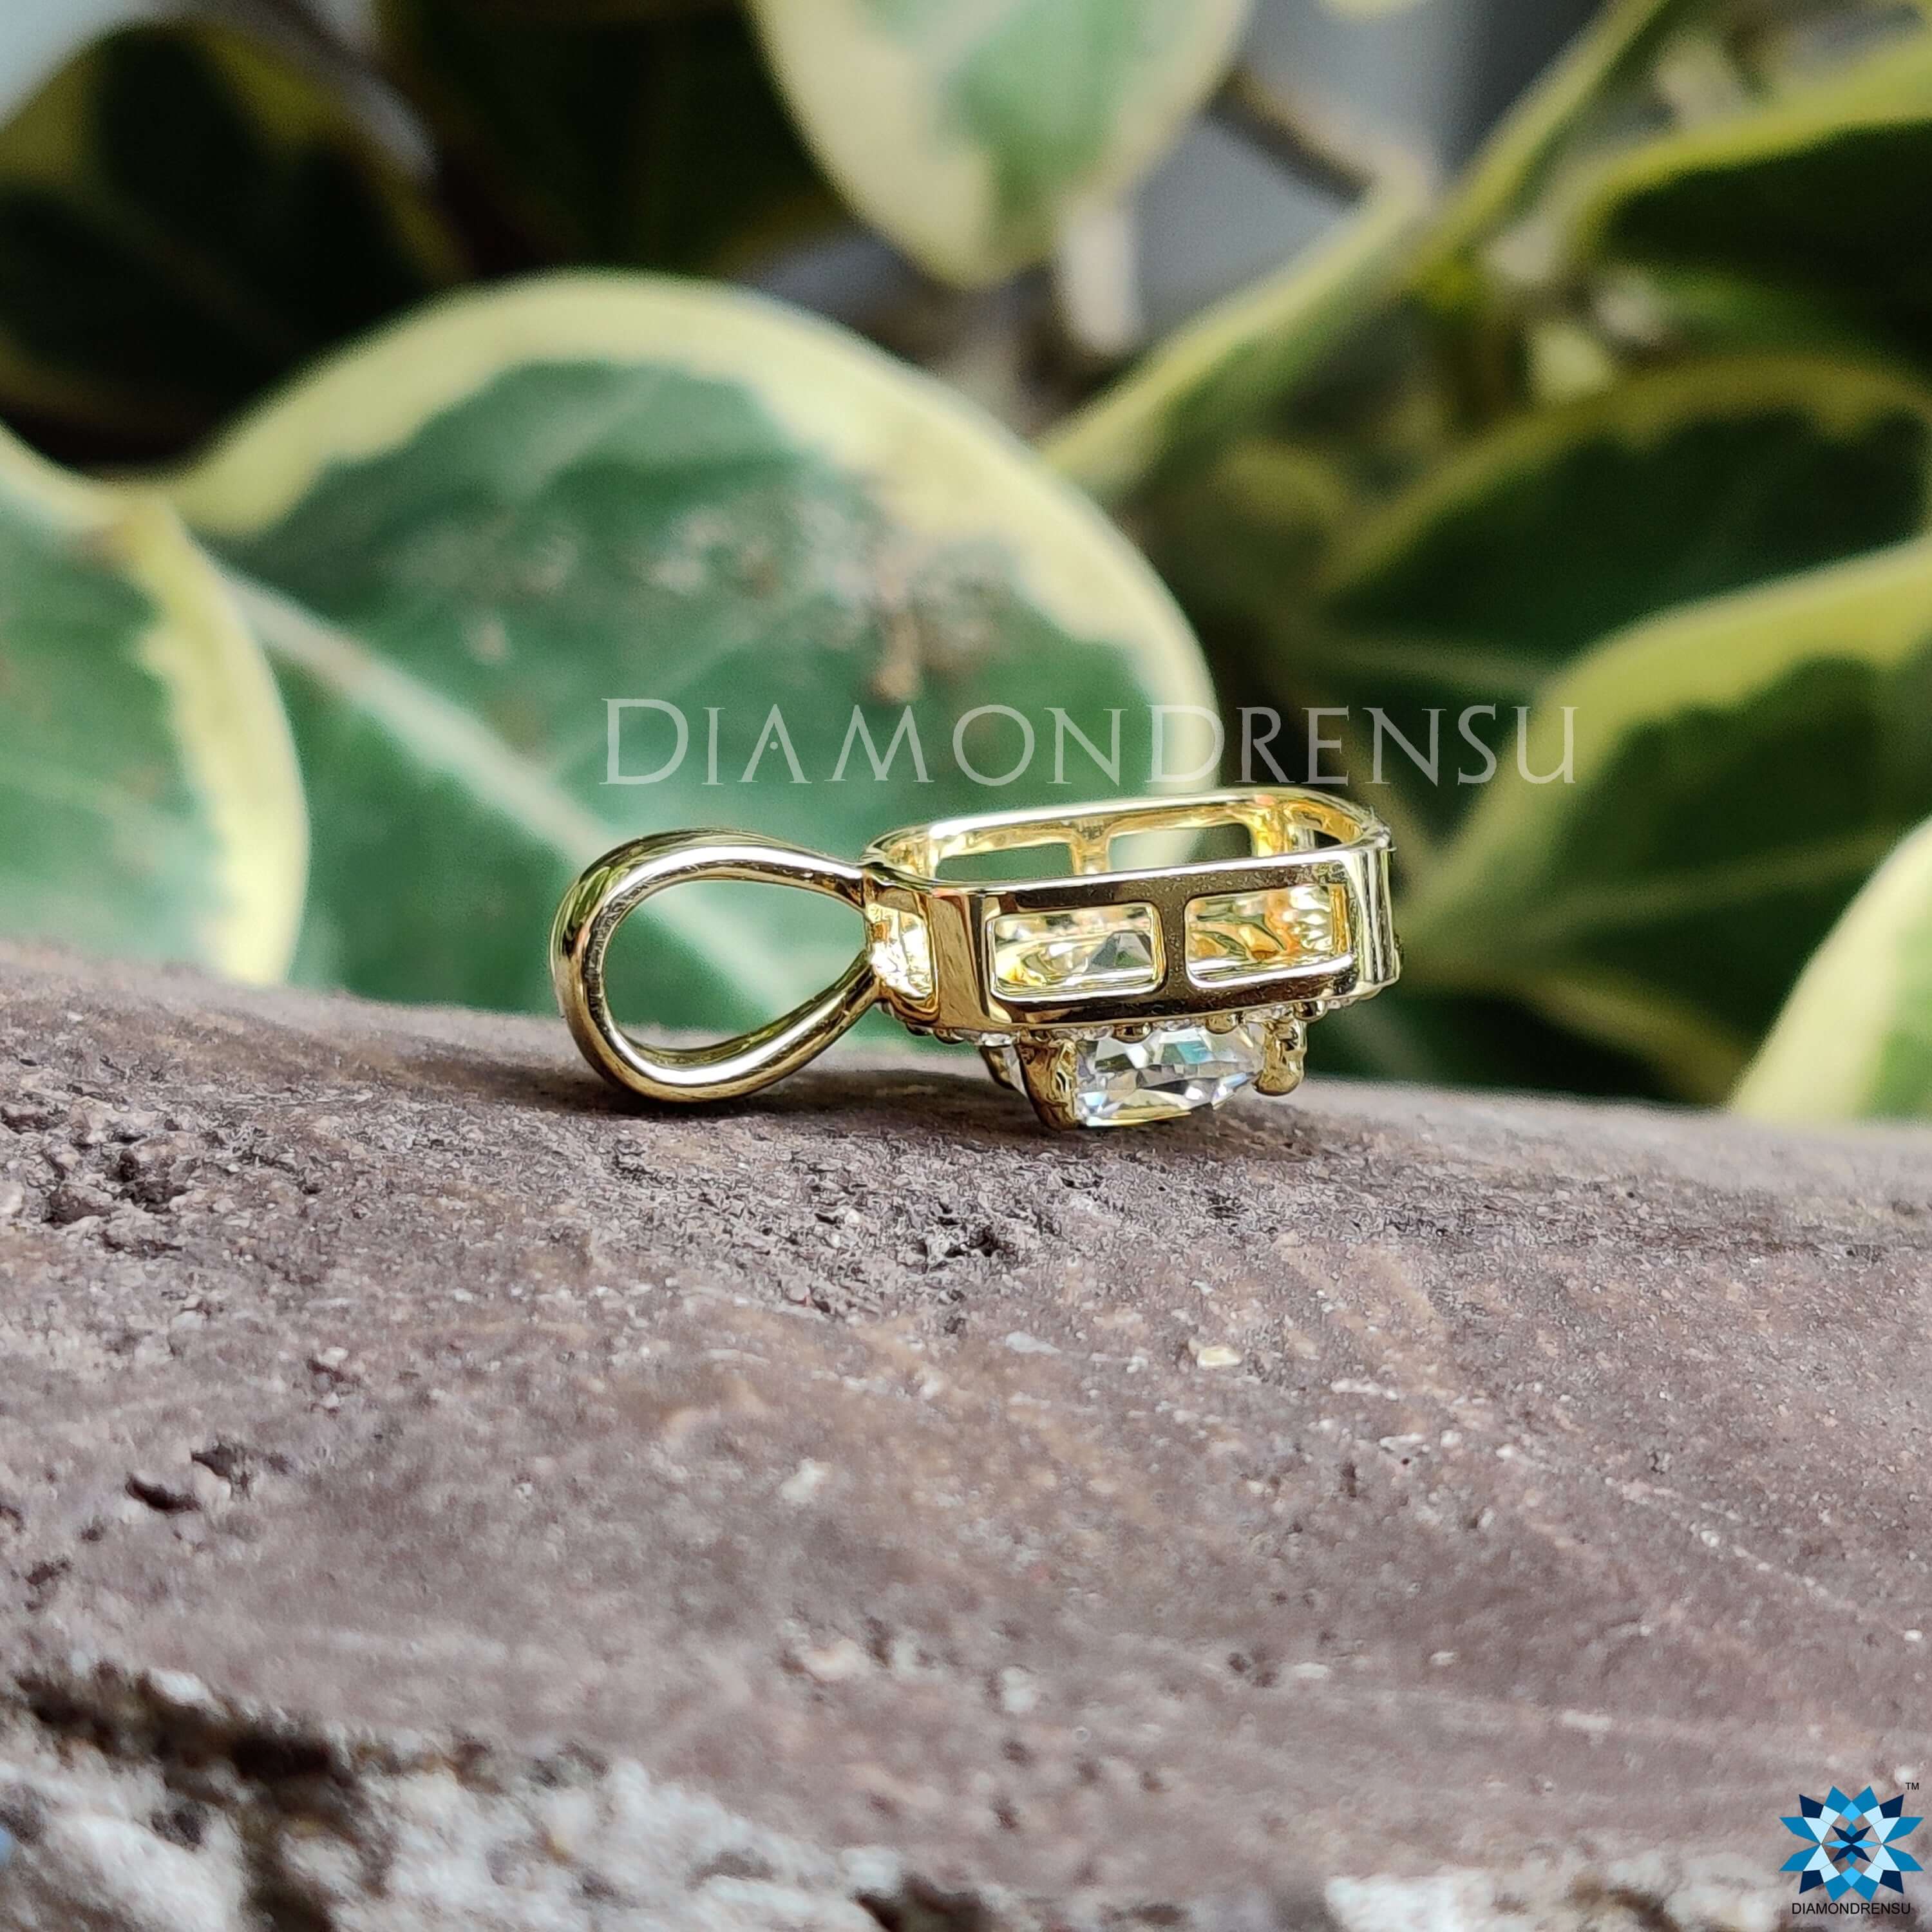 diamondrensu, customzied jewelry, customzied pendant